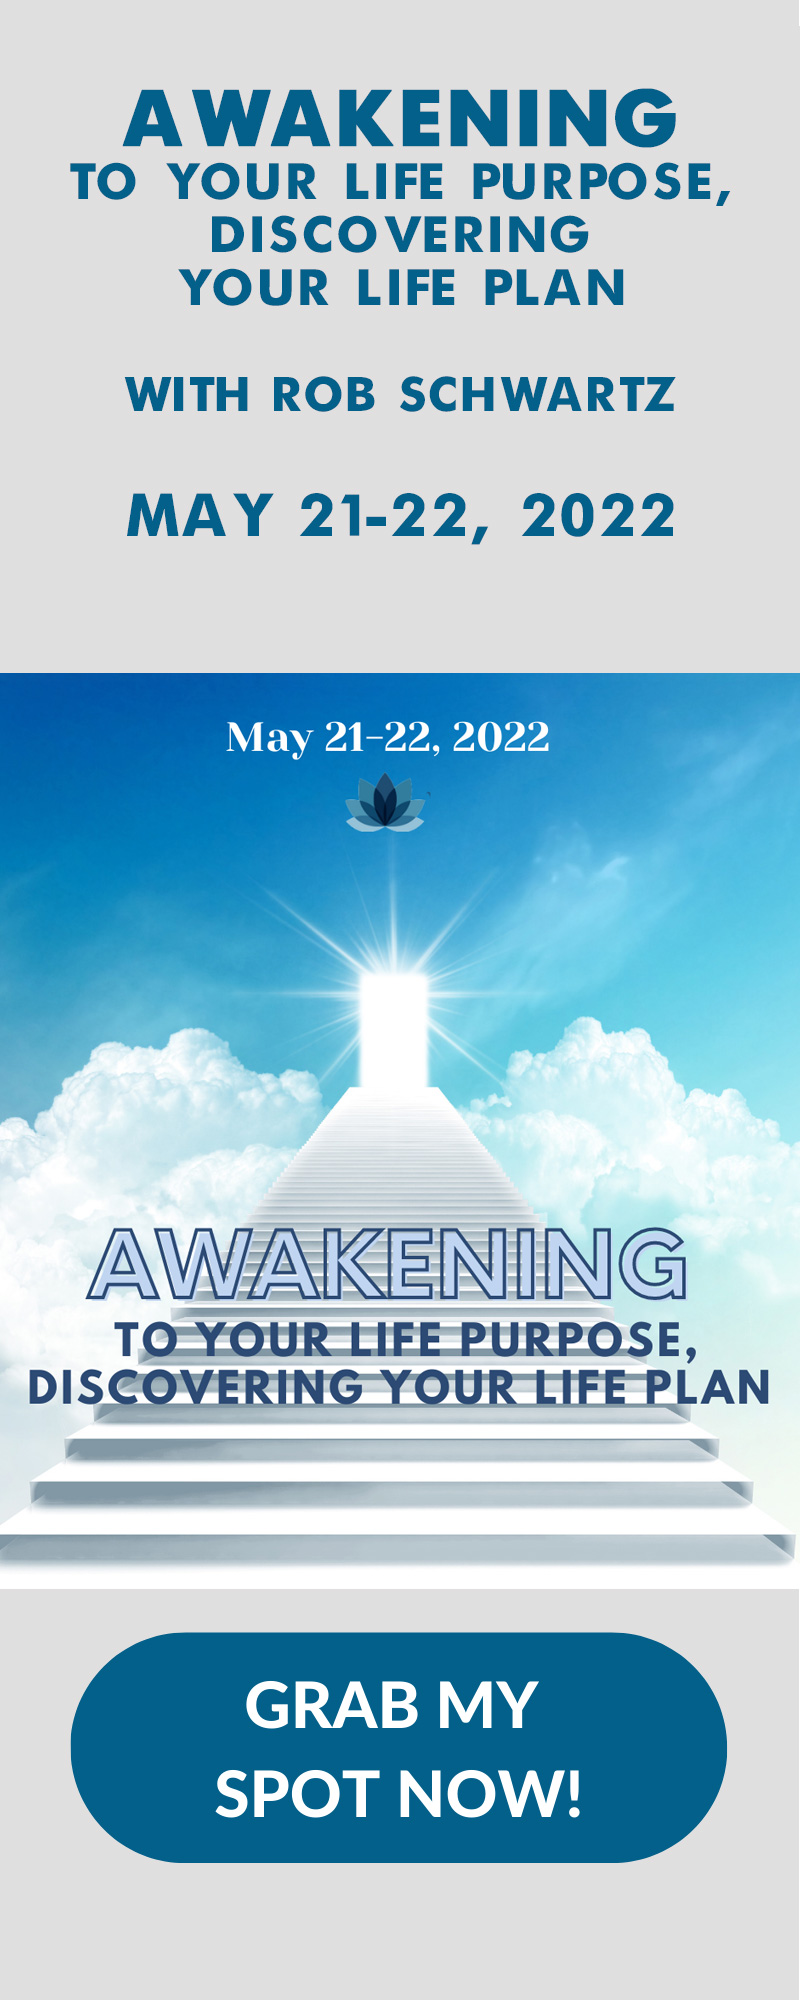 Awakening to Your Life Purpose - May 21-22, 2022